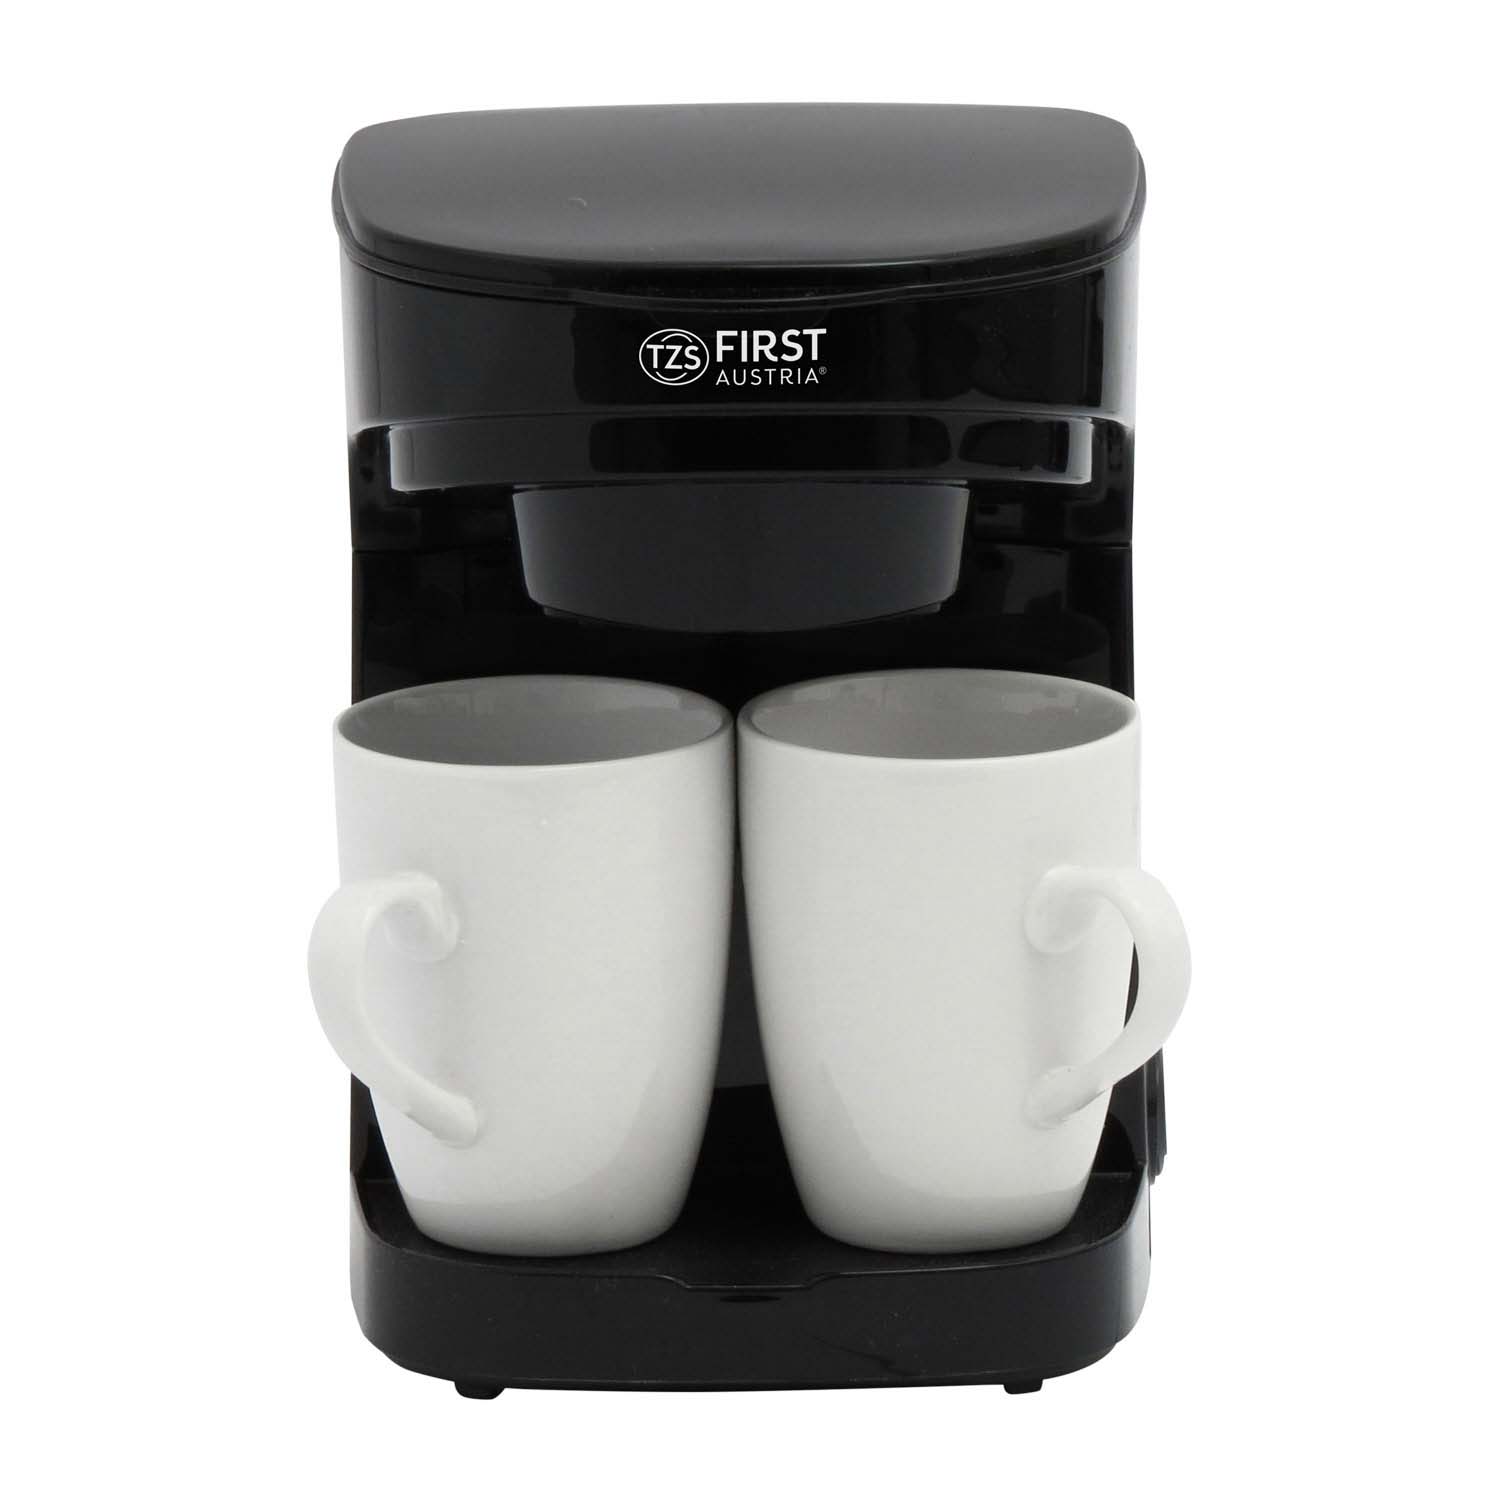 Kaffeemaschine 450 Watt | 0,125 Liter | inkl. 2 Tasse